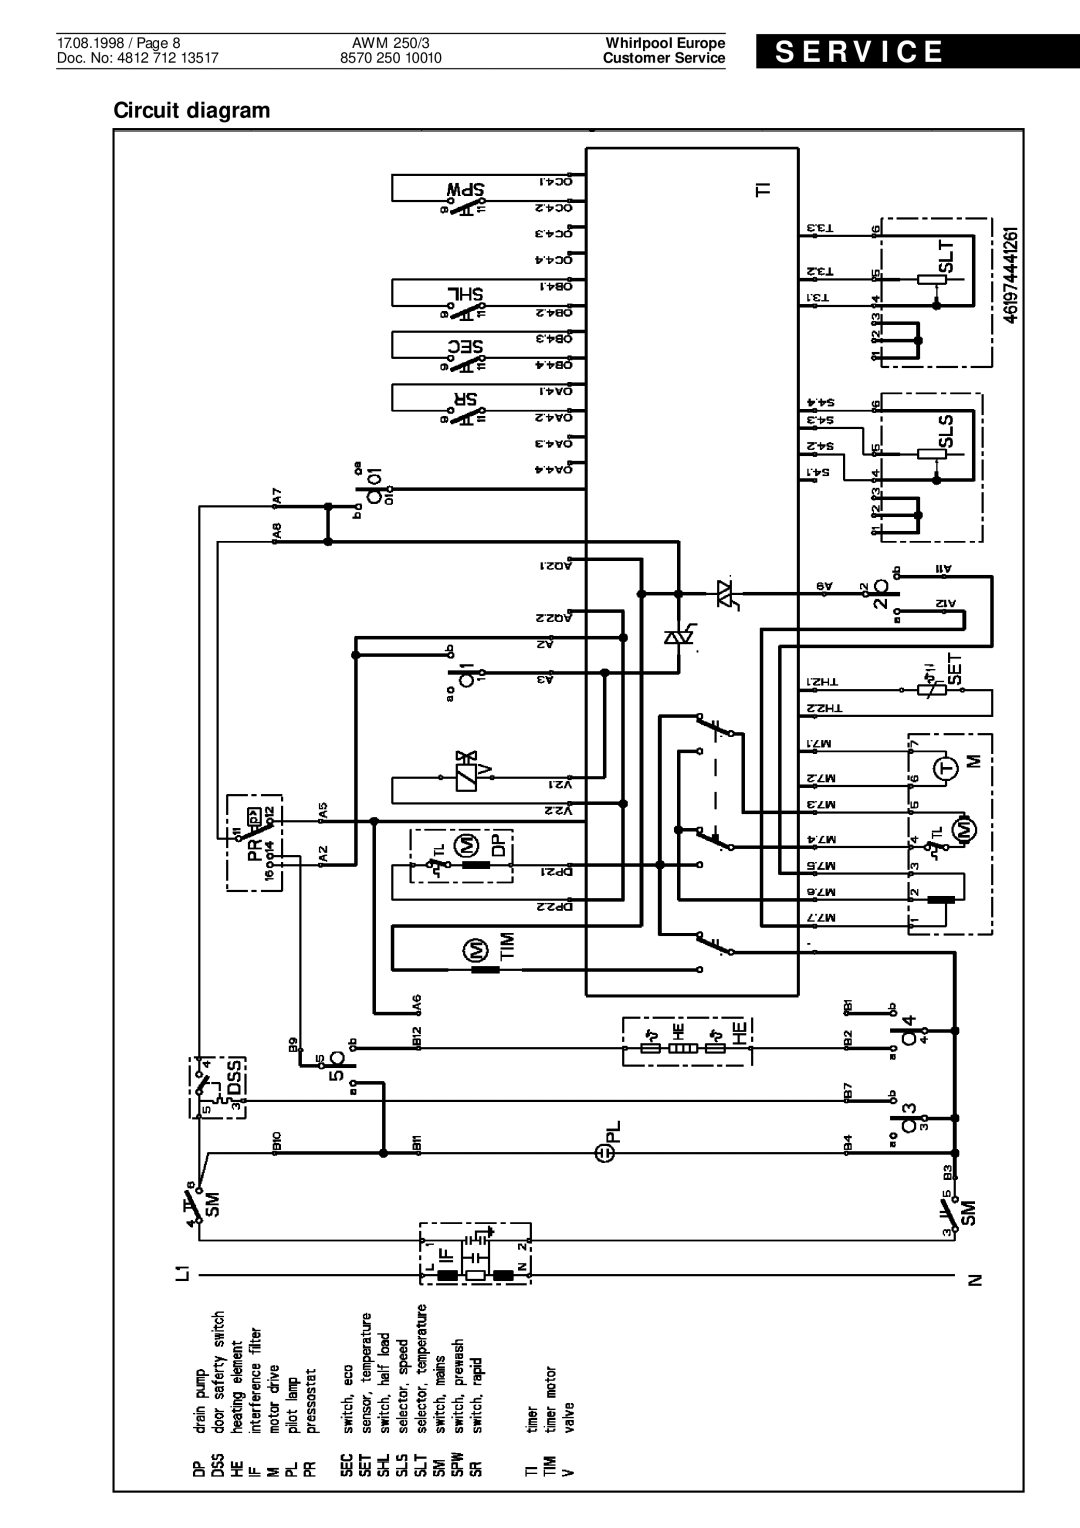 Whirlpool AWM 250 3 service manual Circuit diagram, S E R V I C E, Whirlpool Europe, Customer Service 